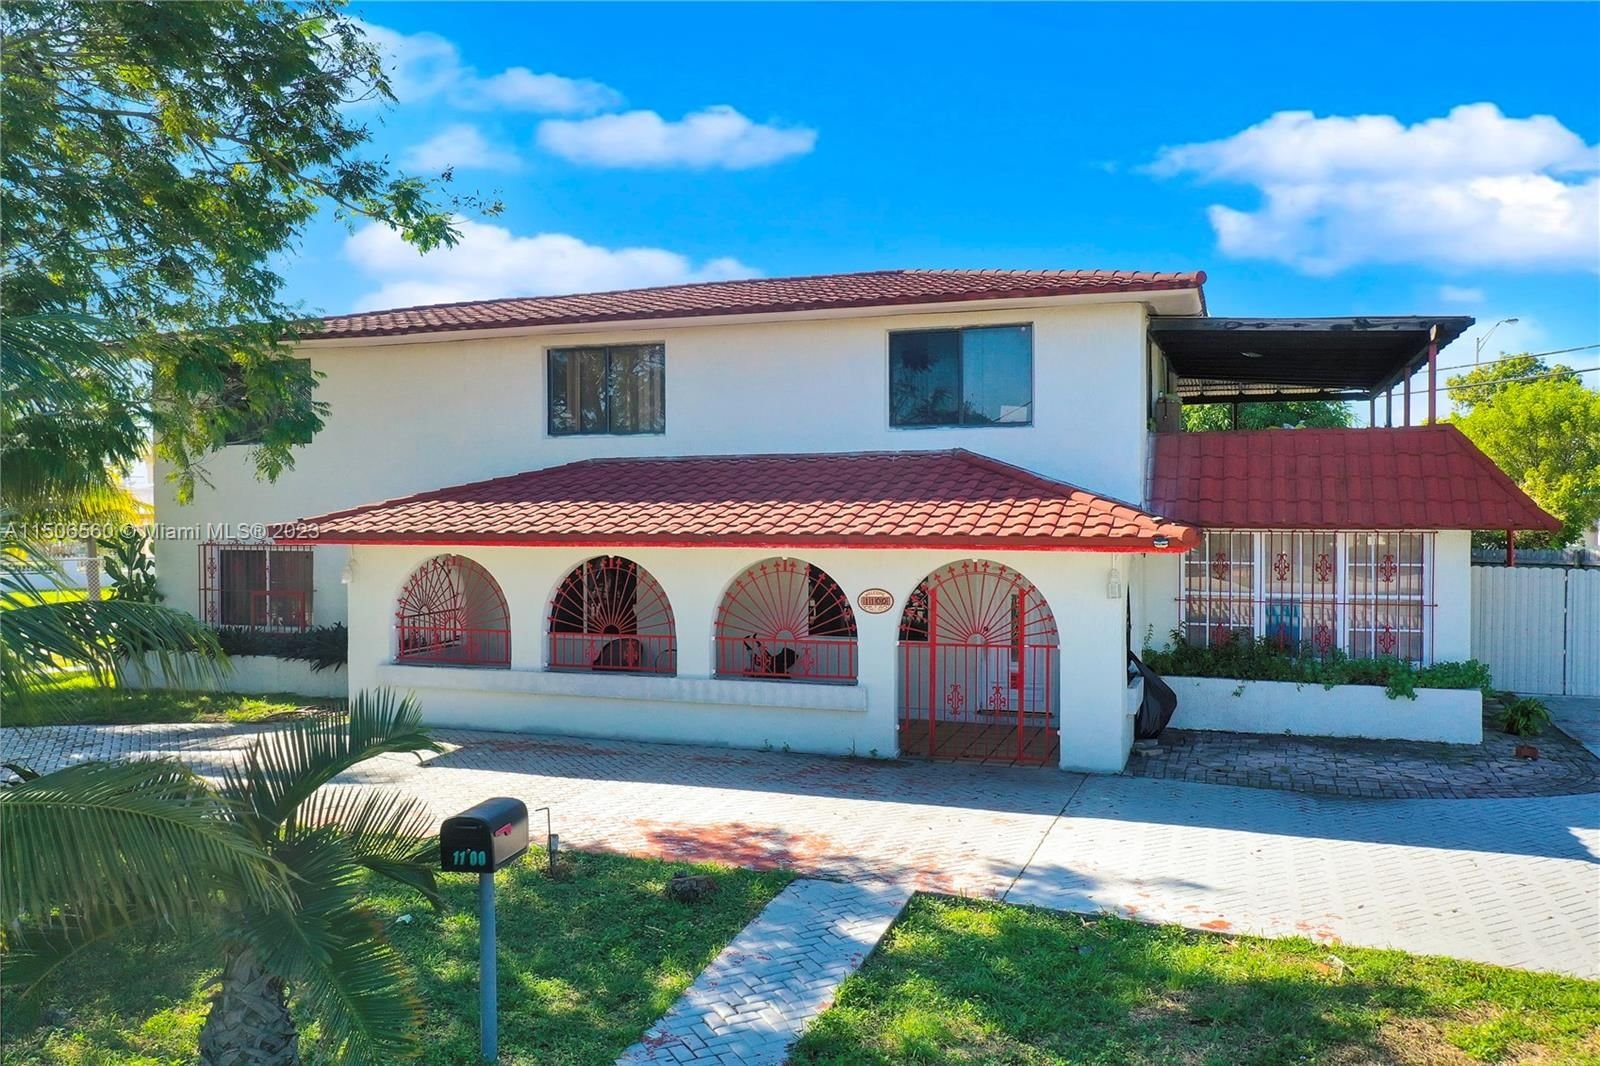 Real estate property located at 1100 8th Ct, Miami-Dade County, SUN-TAN VILLAGE SEC 4, Hialeah, FL